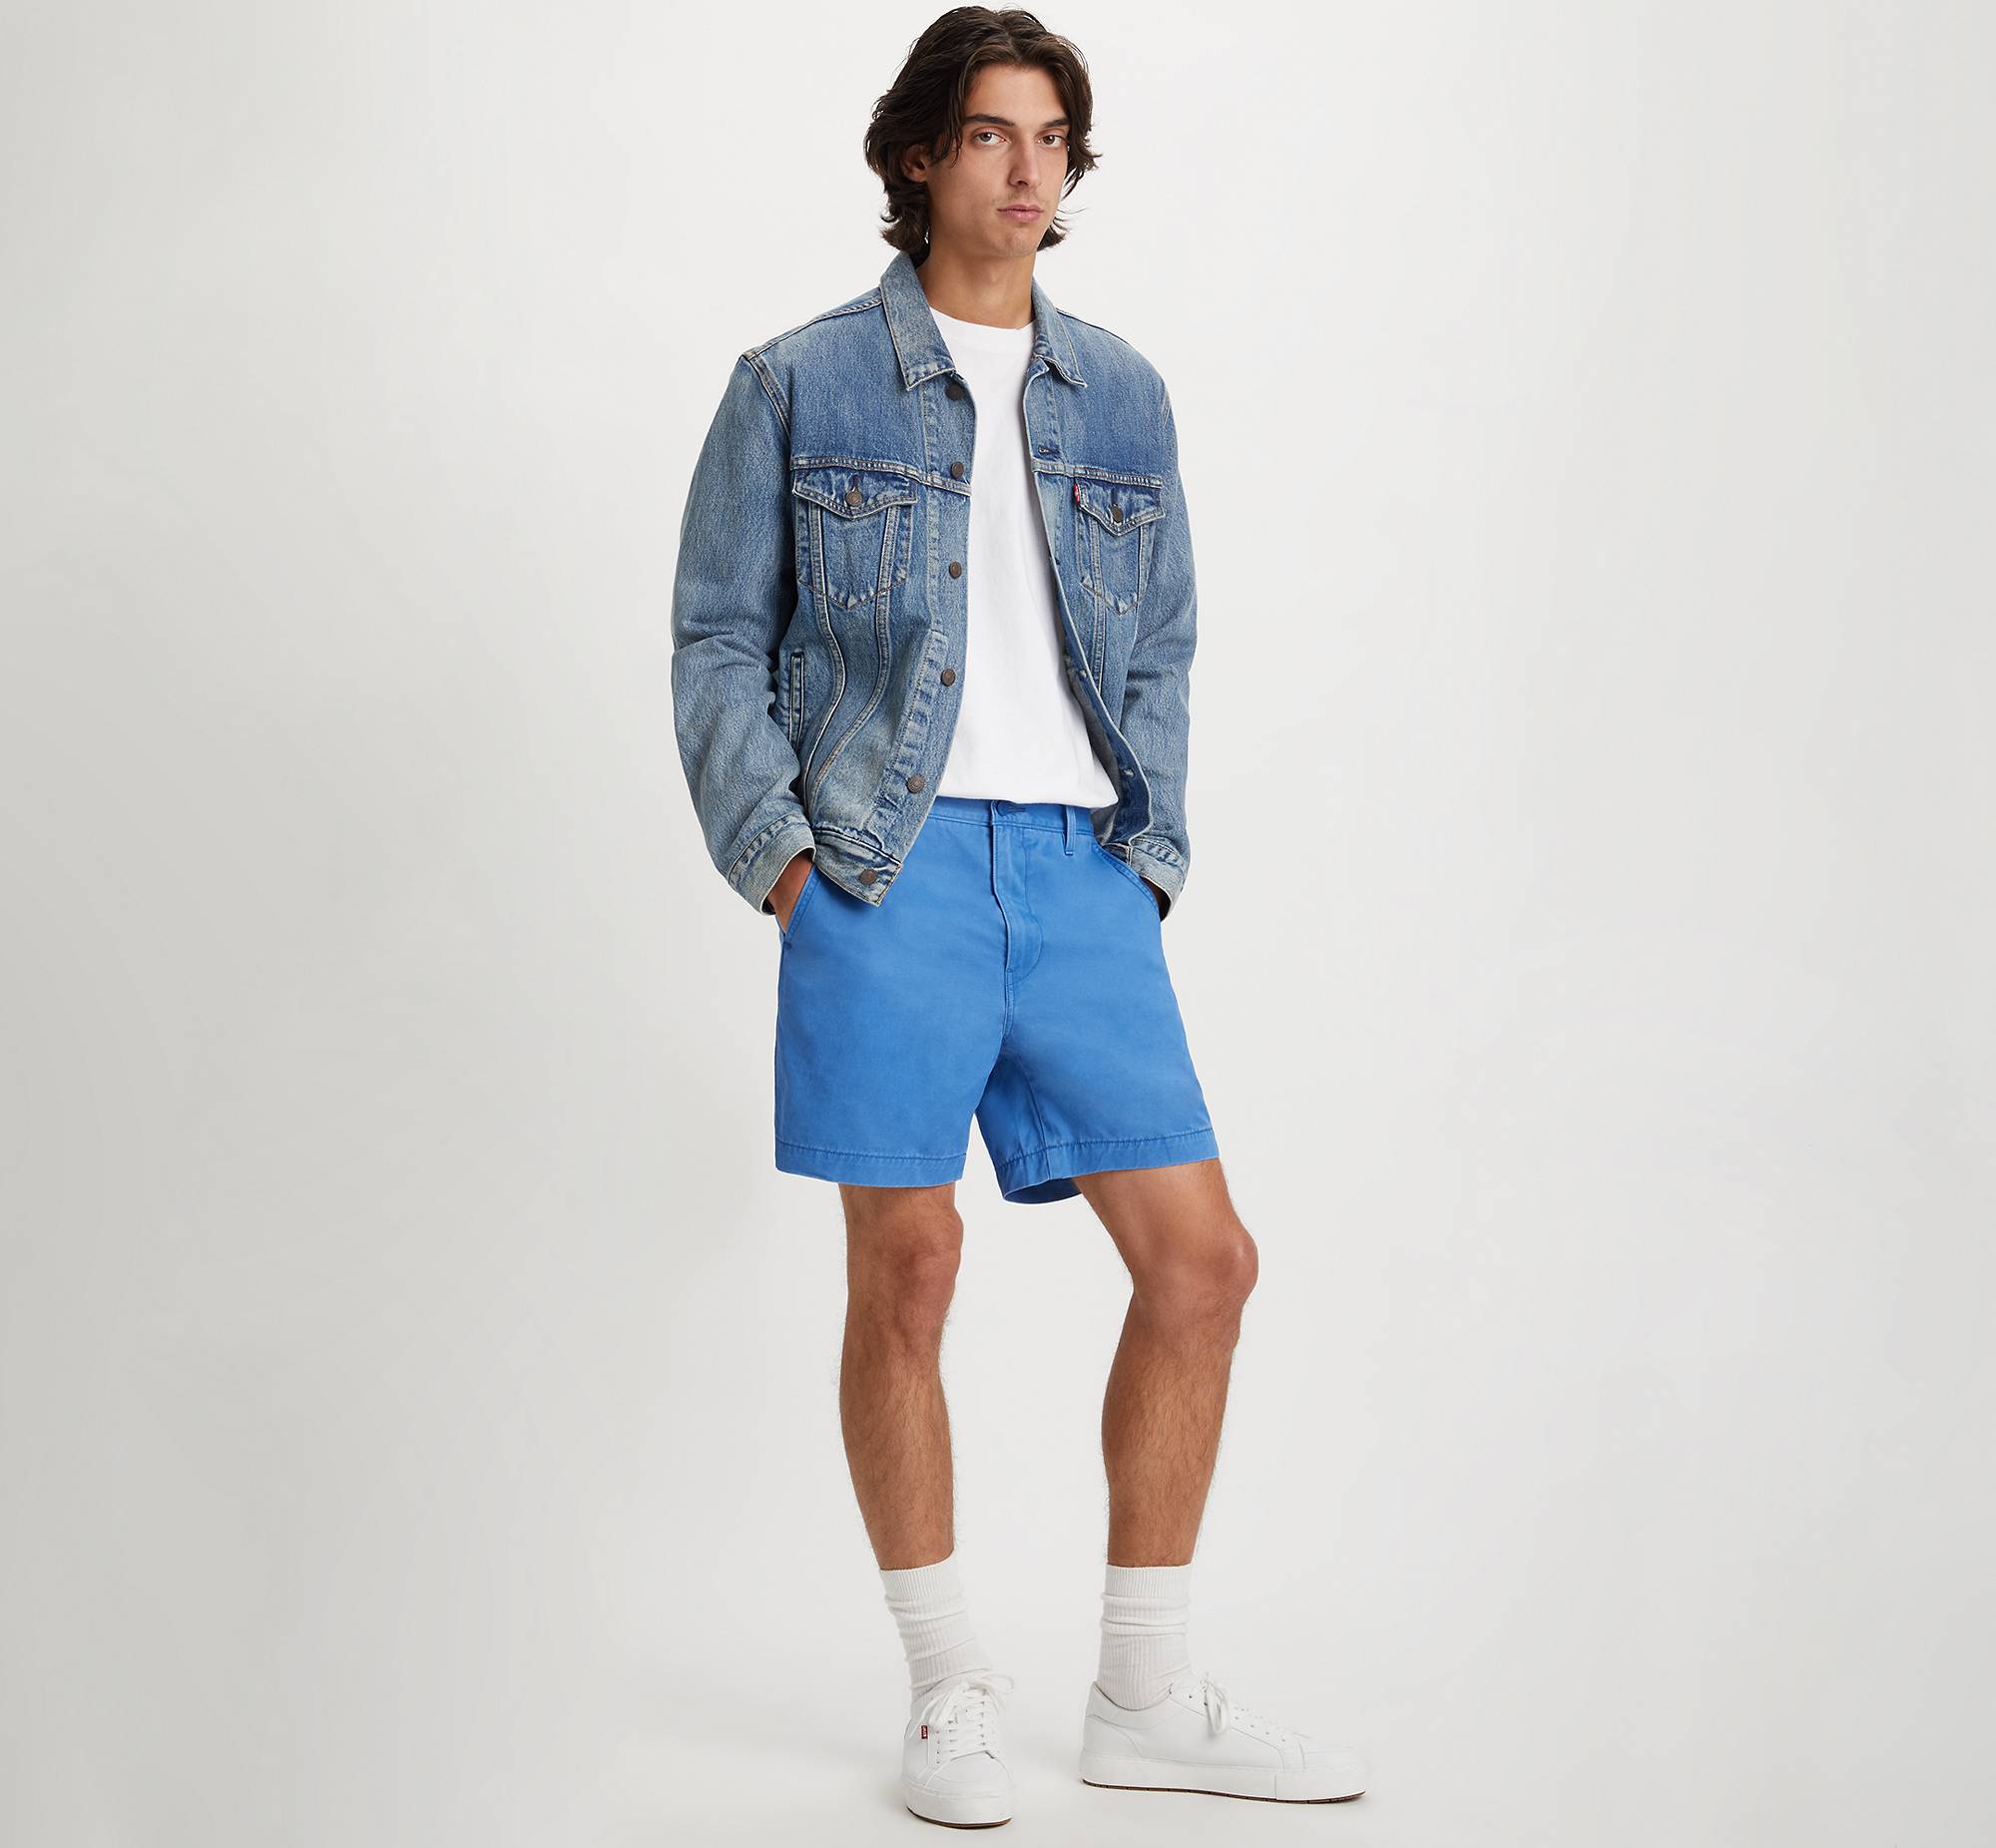 Xx Authentic Shorts Ii - Blue